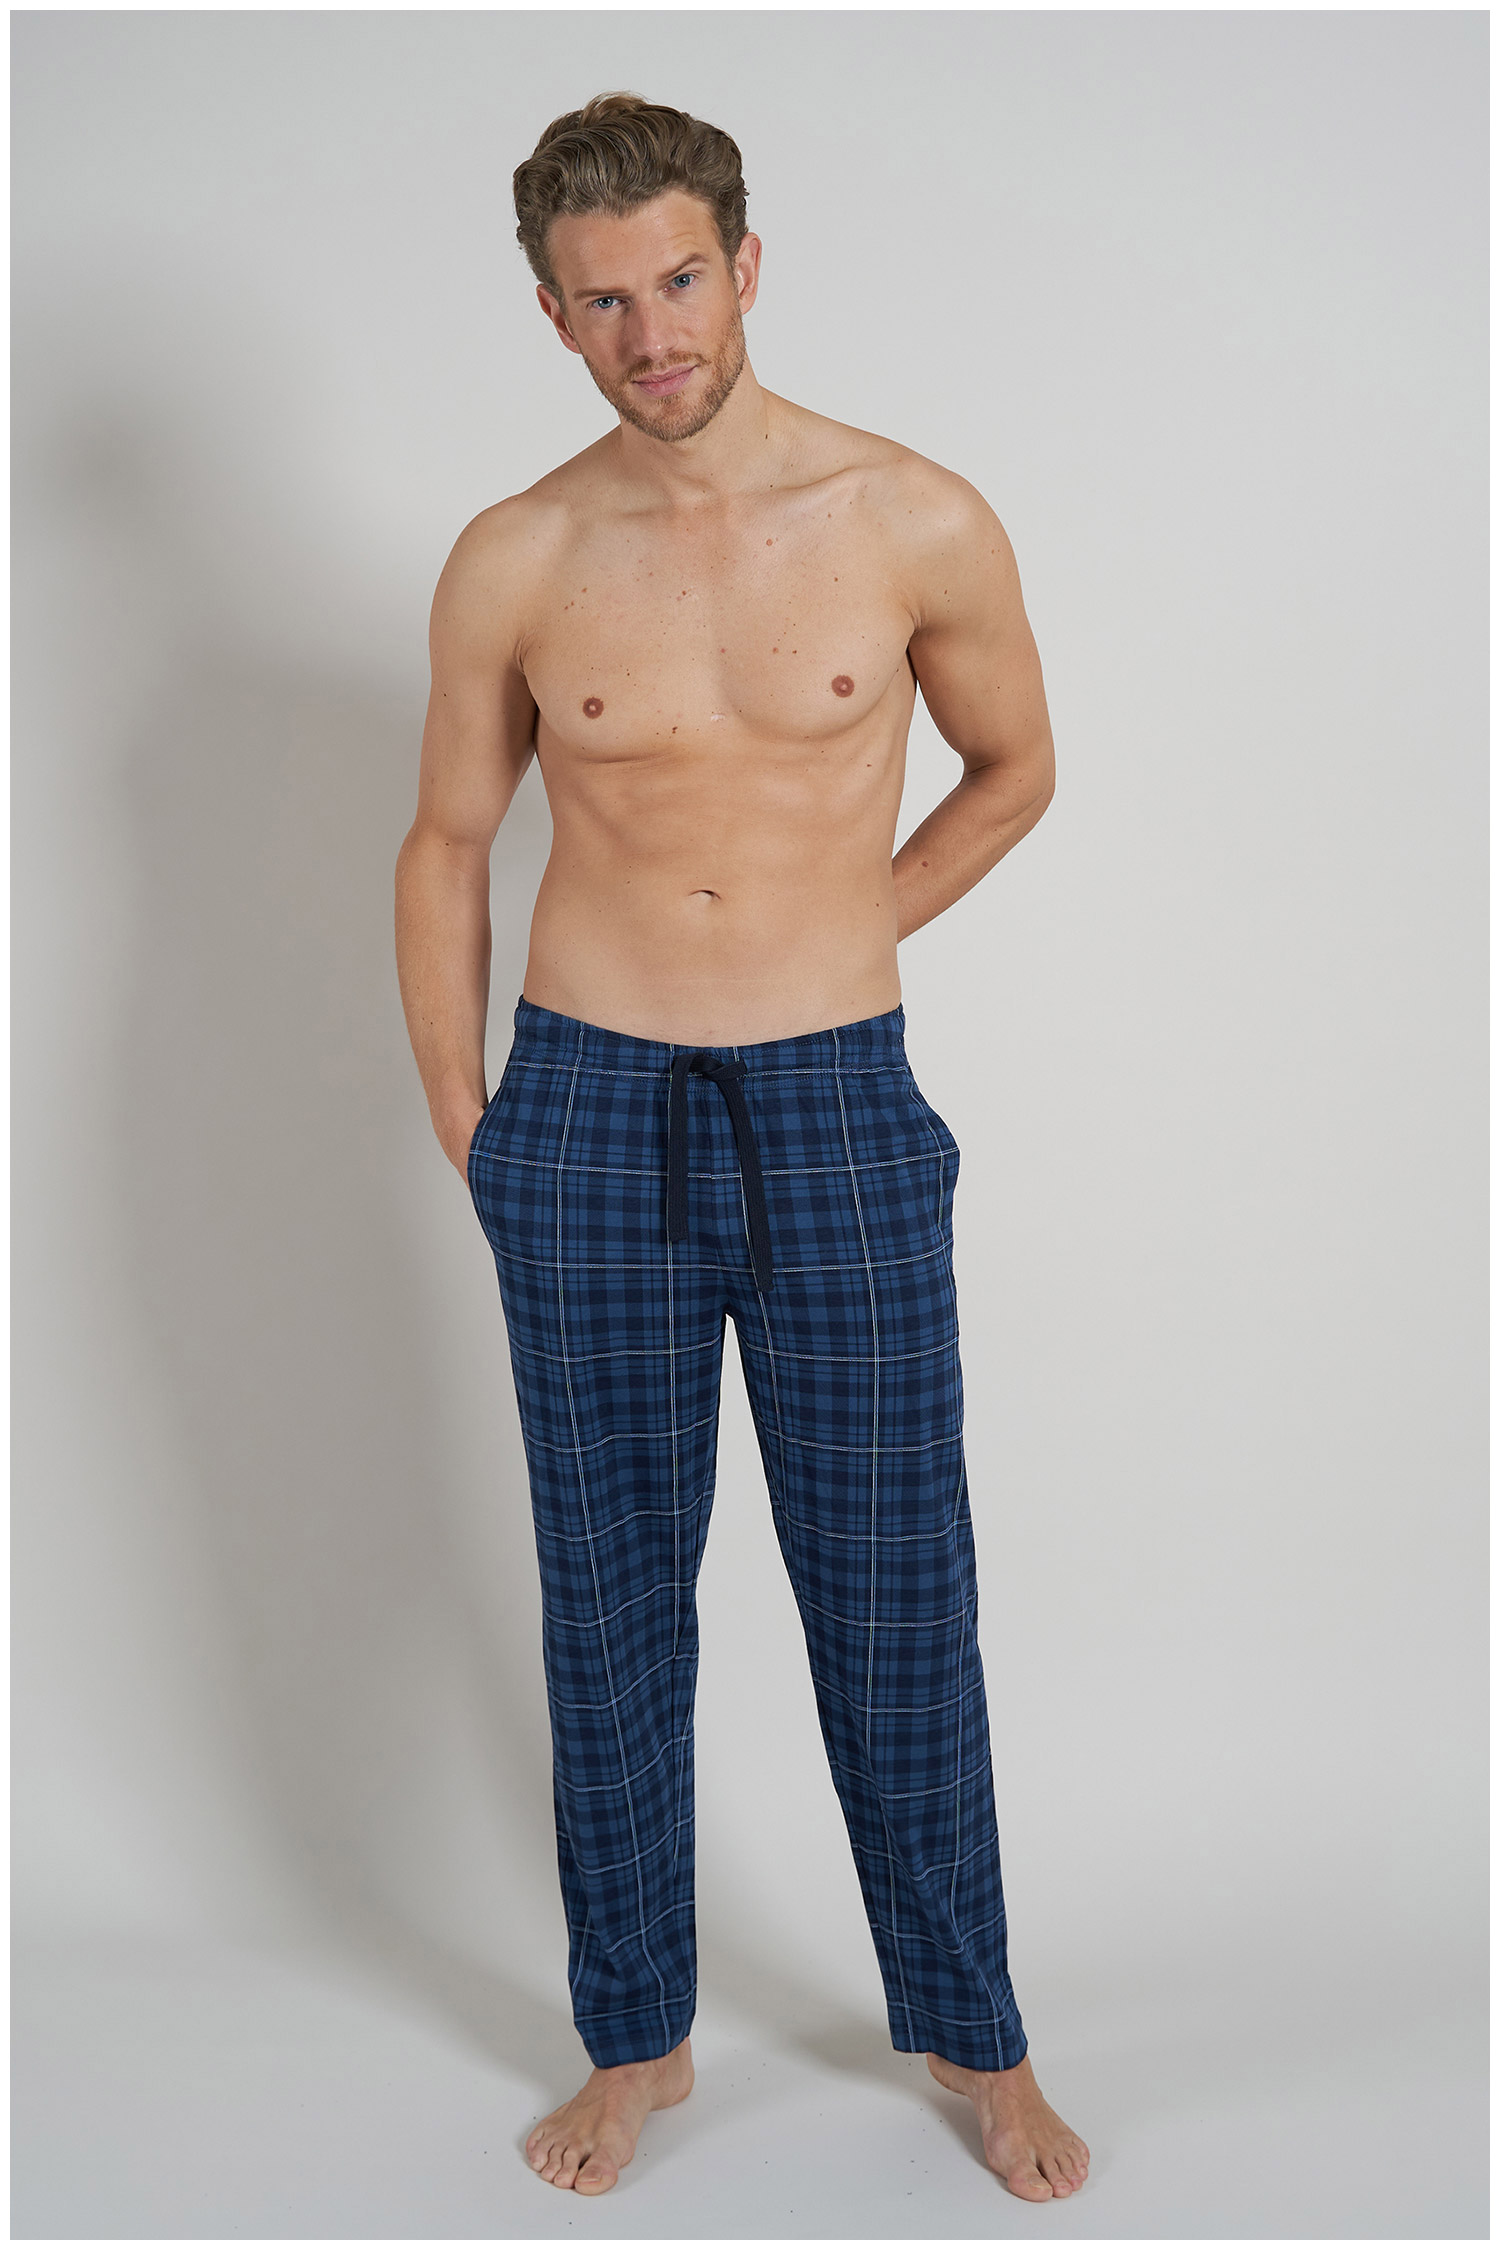 Homewear, Pantalones, 111893, MARINO | Zoom